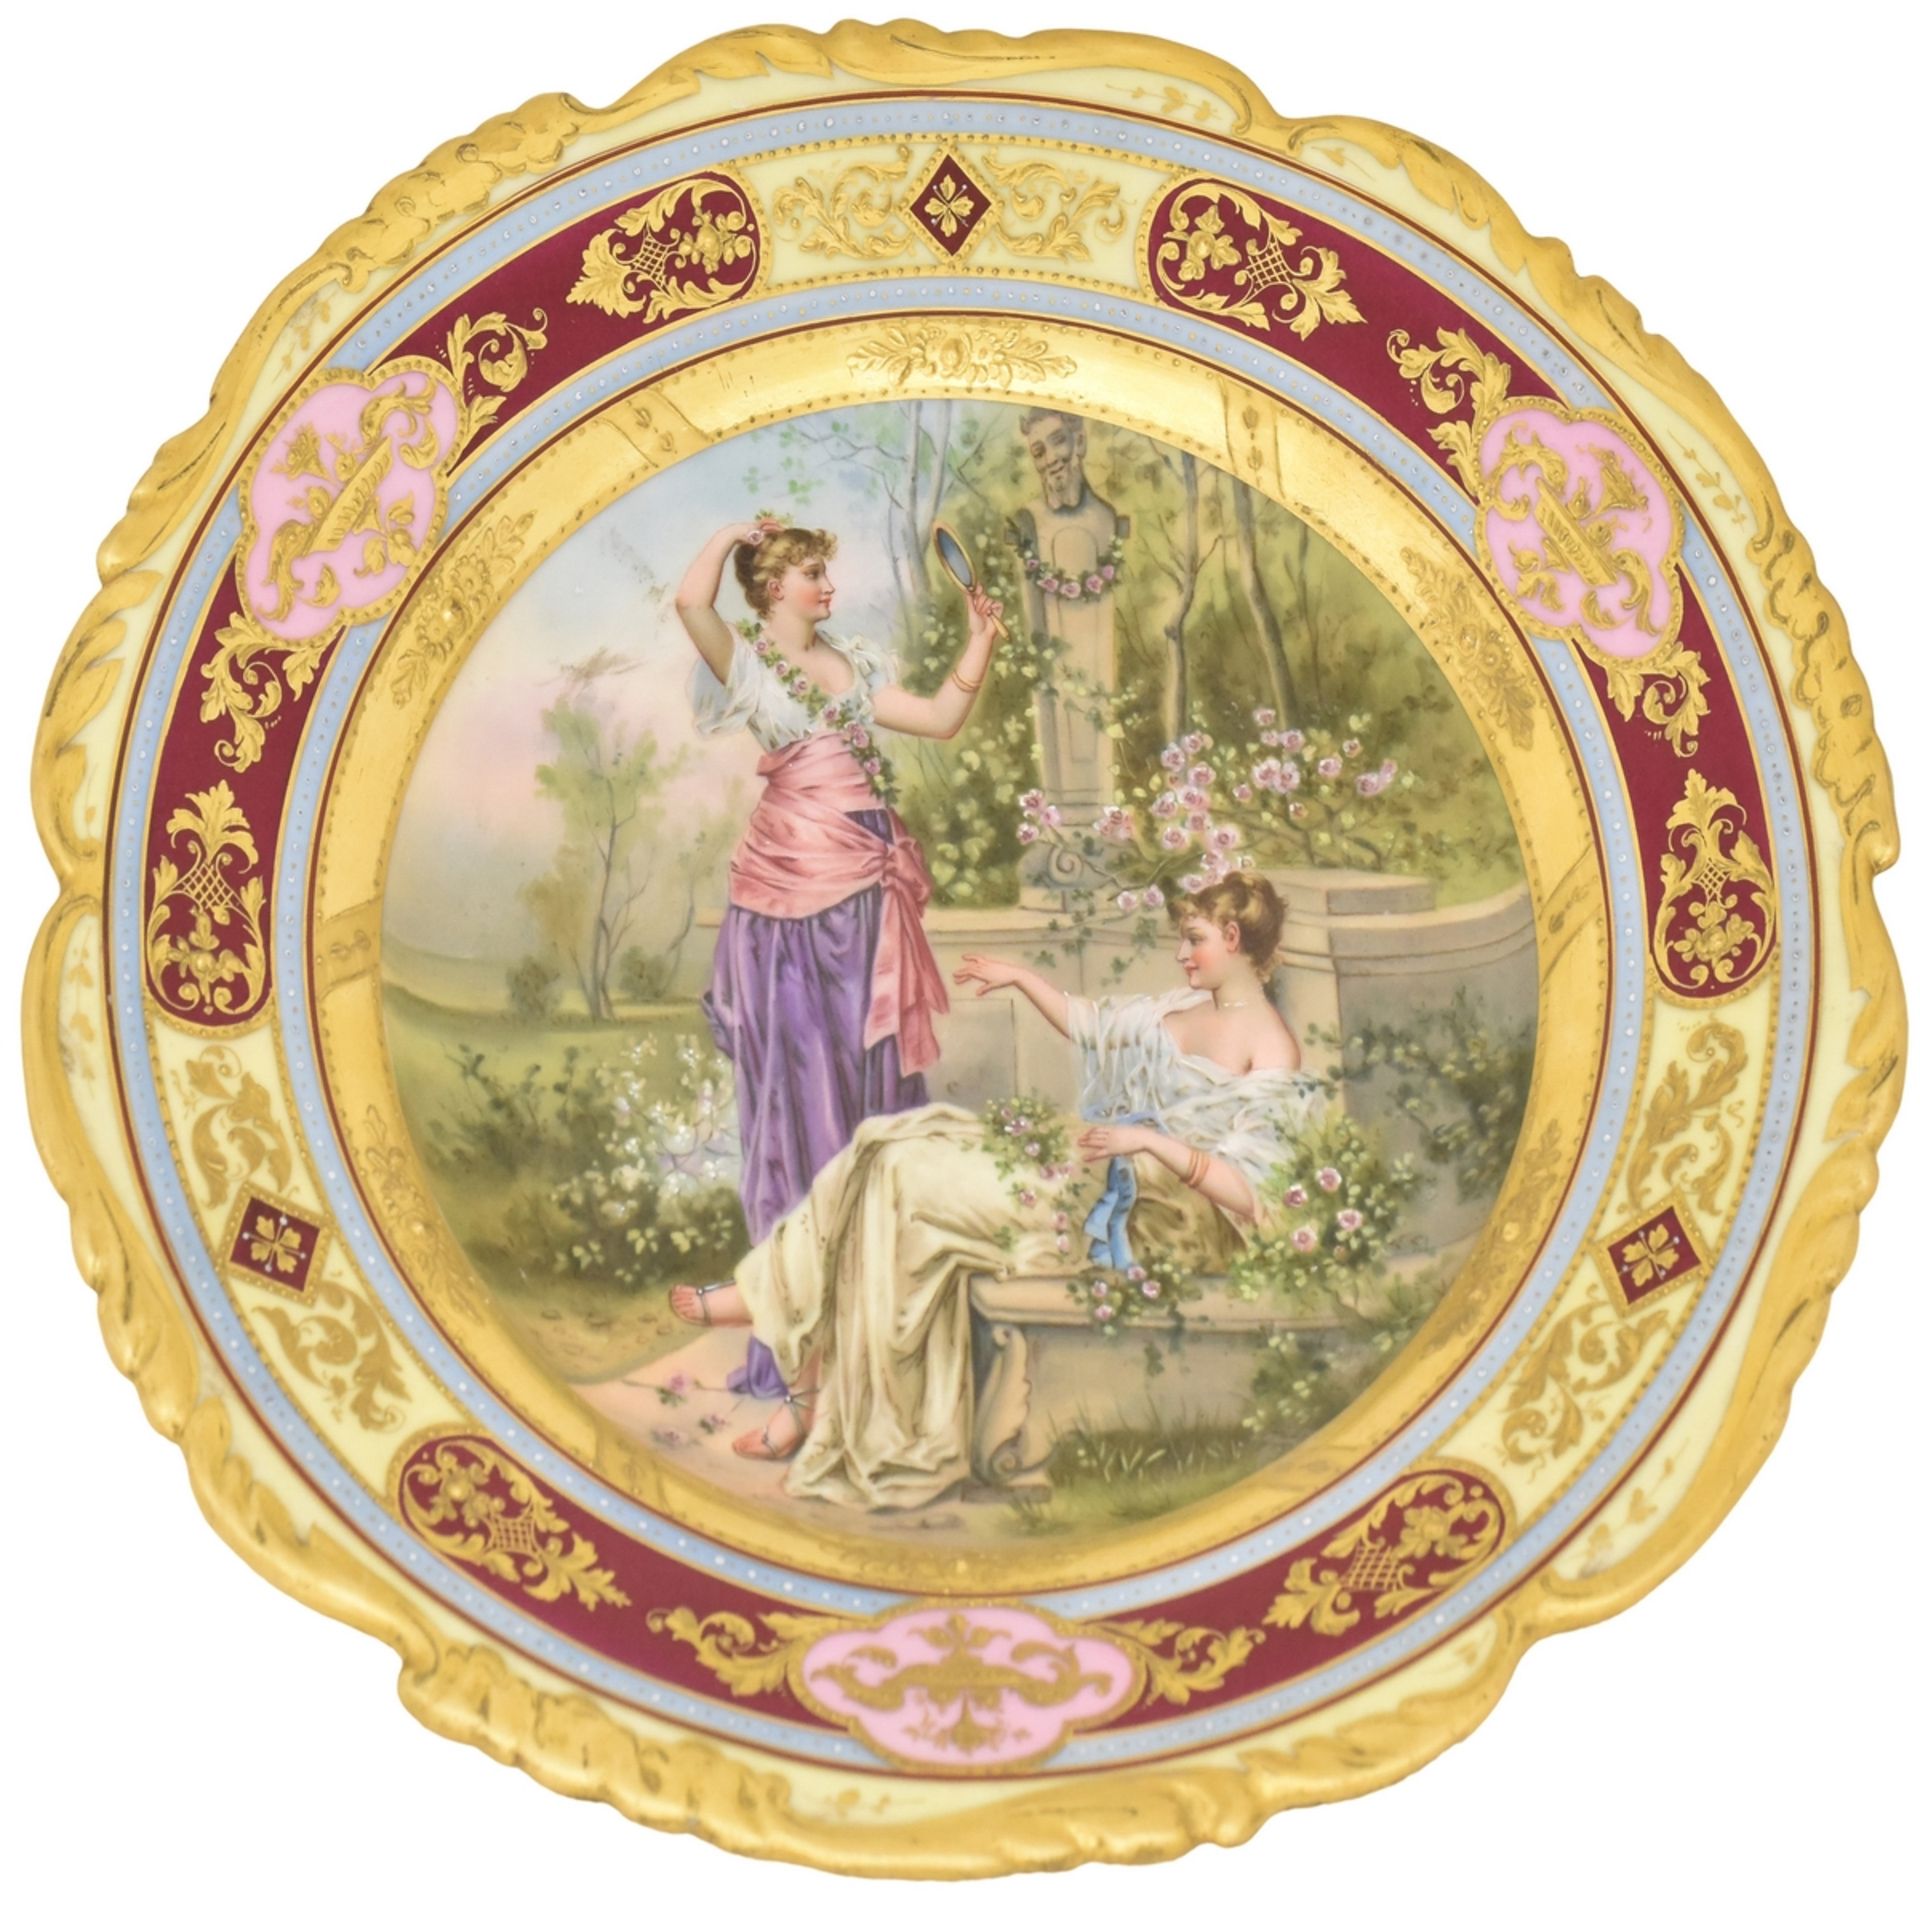 [Austrian] Porcelain plate with pastoral scene. â€“ Austria, Vienna Porcelain Manufactory, late 19th